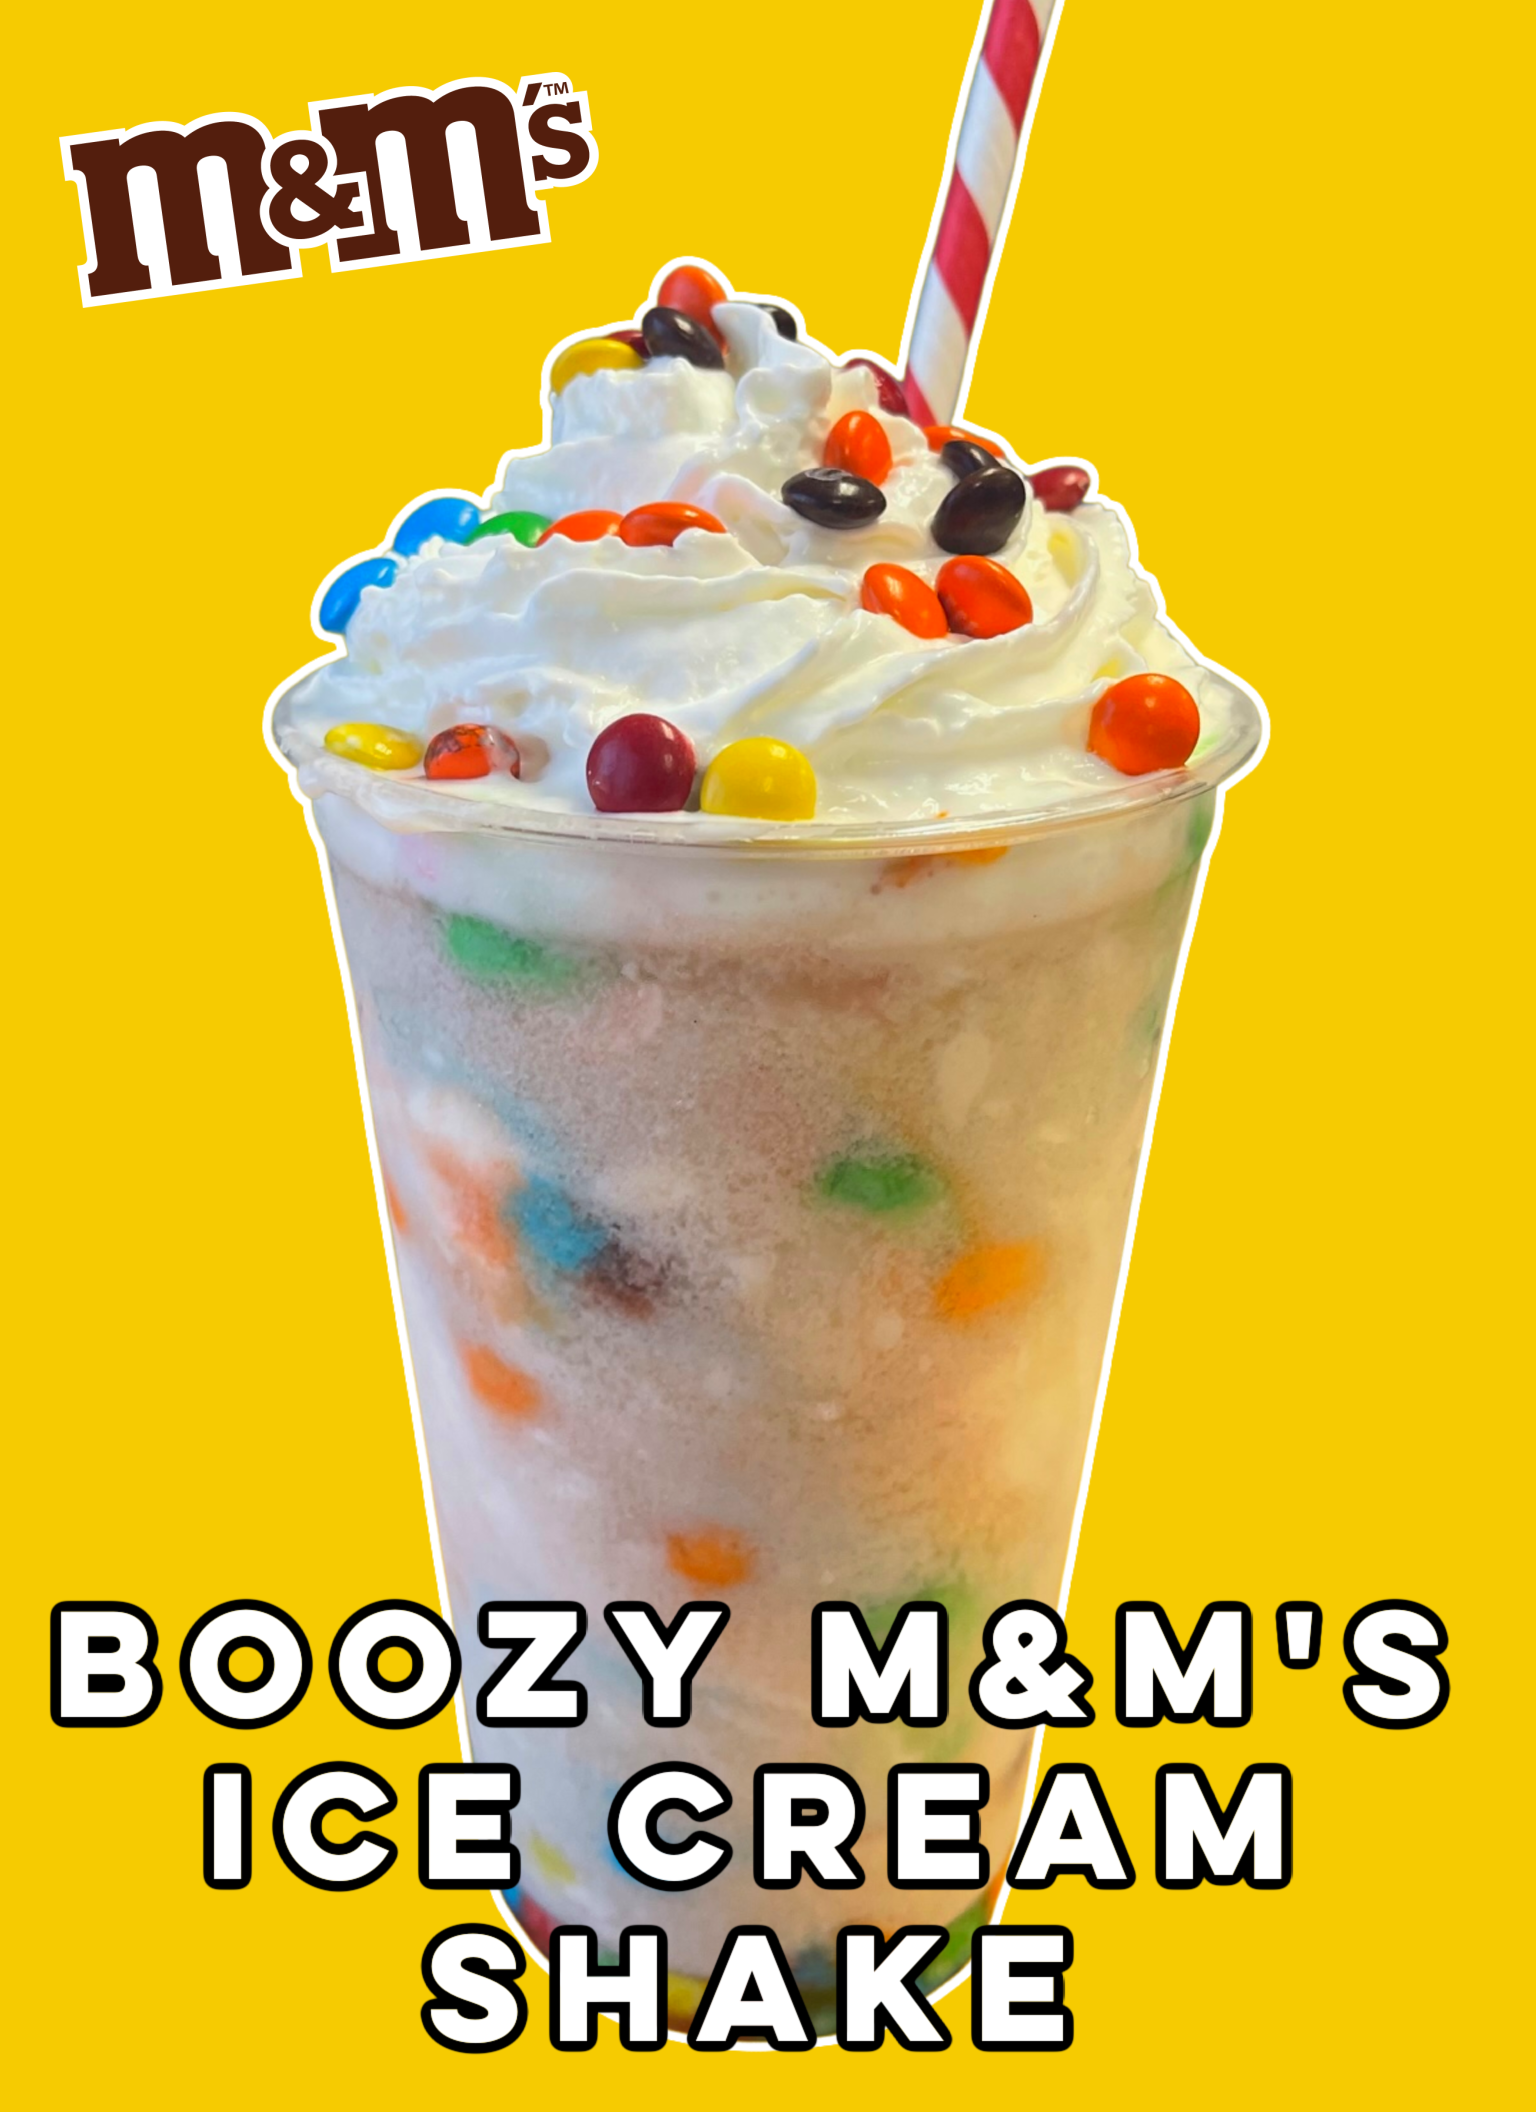 Boozy M&M's Ice Cream Shake